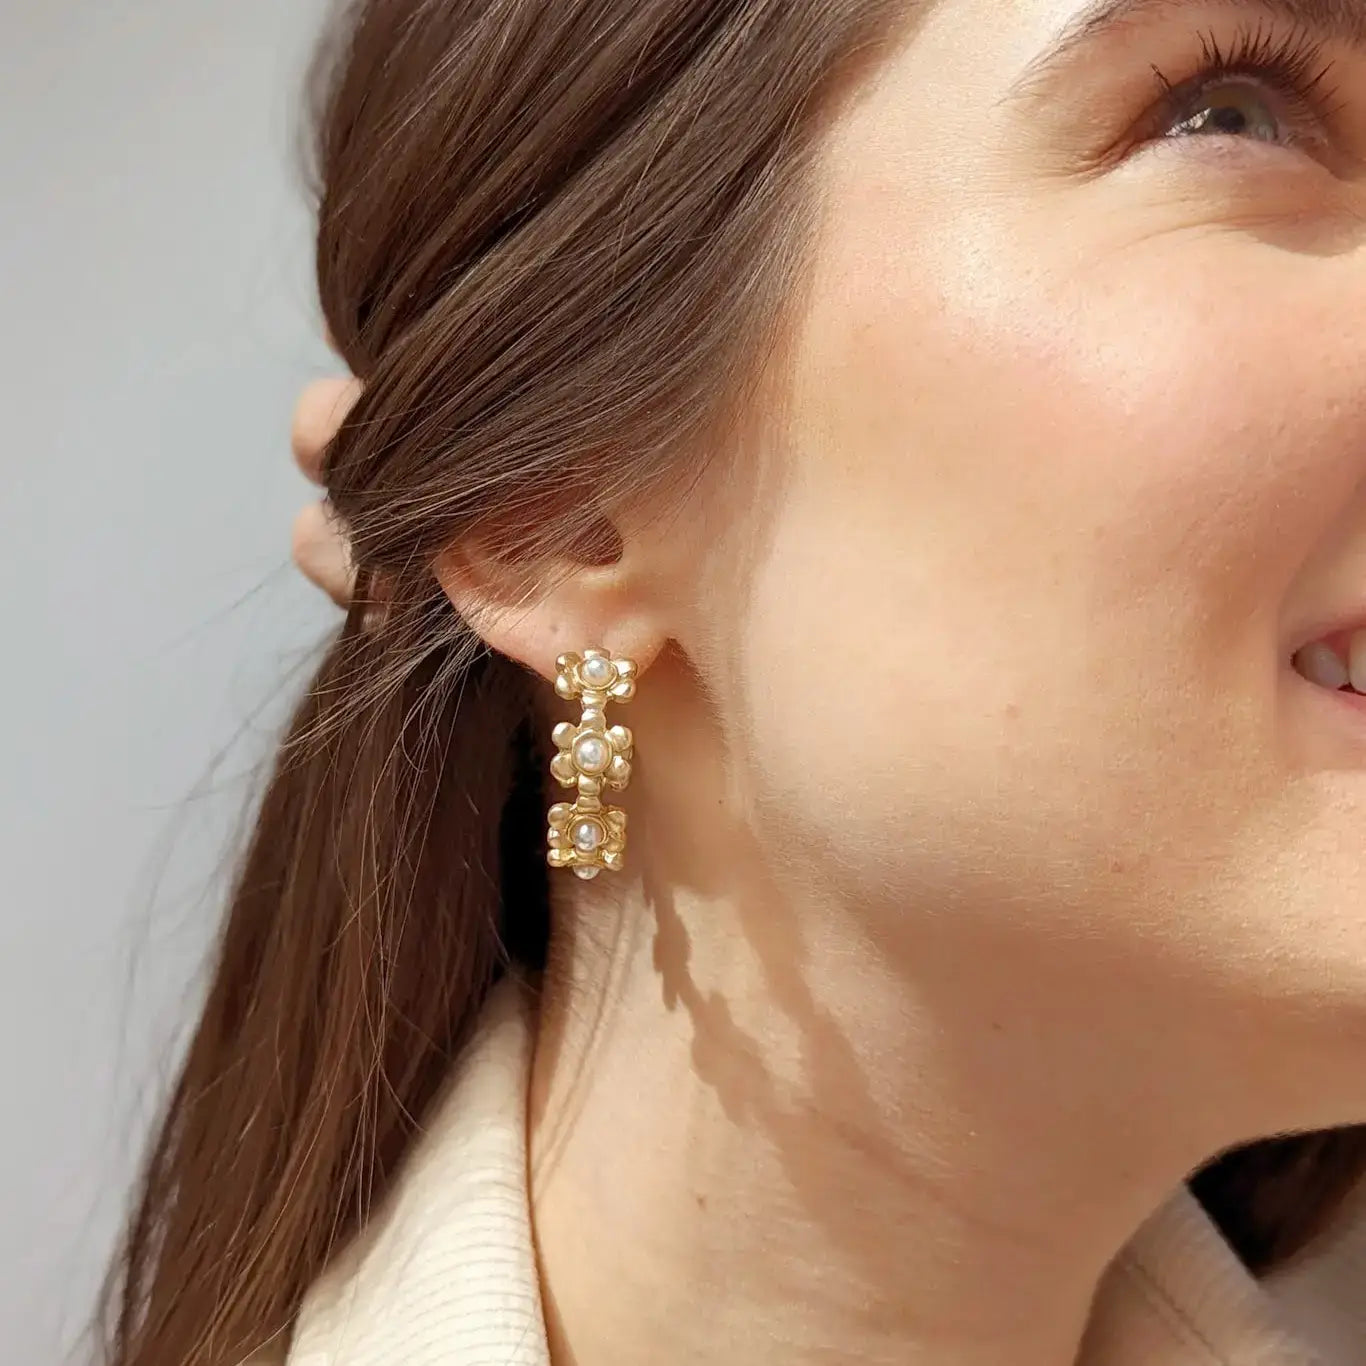 Jesse Earrings by My Girl In LA are hoop style in a matte gold finish. Earrings are also Sensitive Skin Friendly.